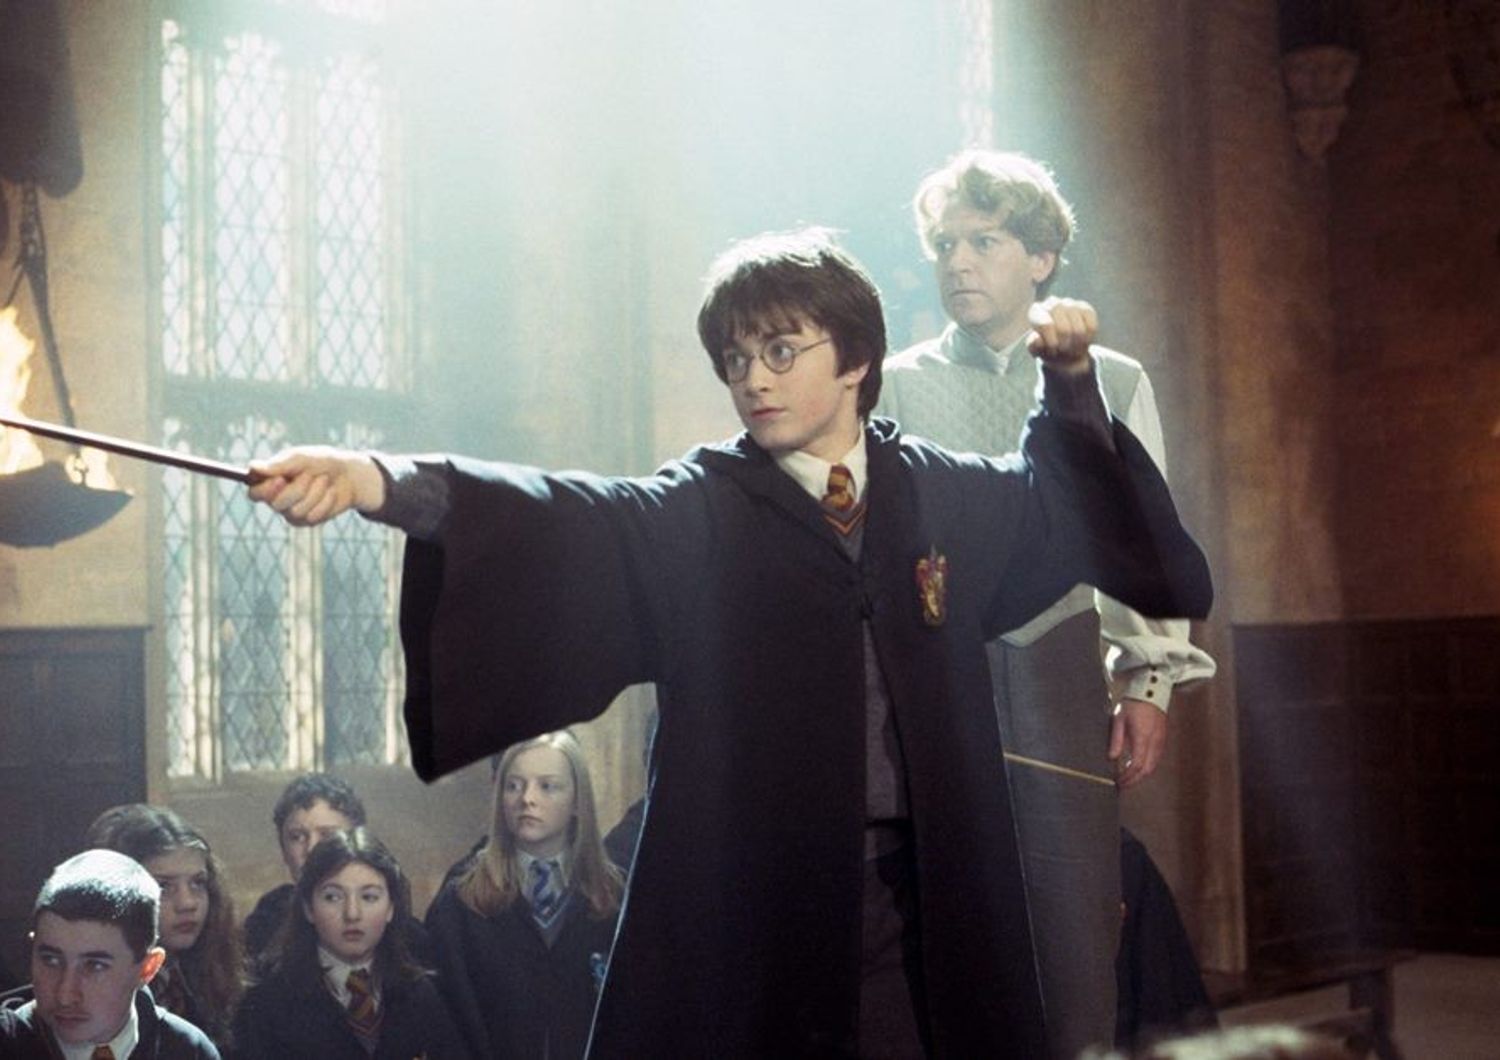 &nbsp;Harry Potter